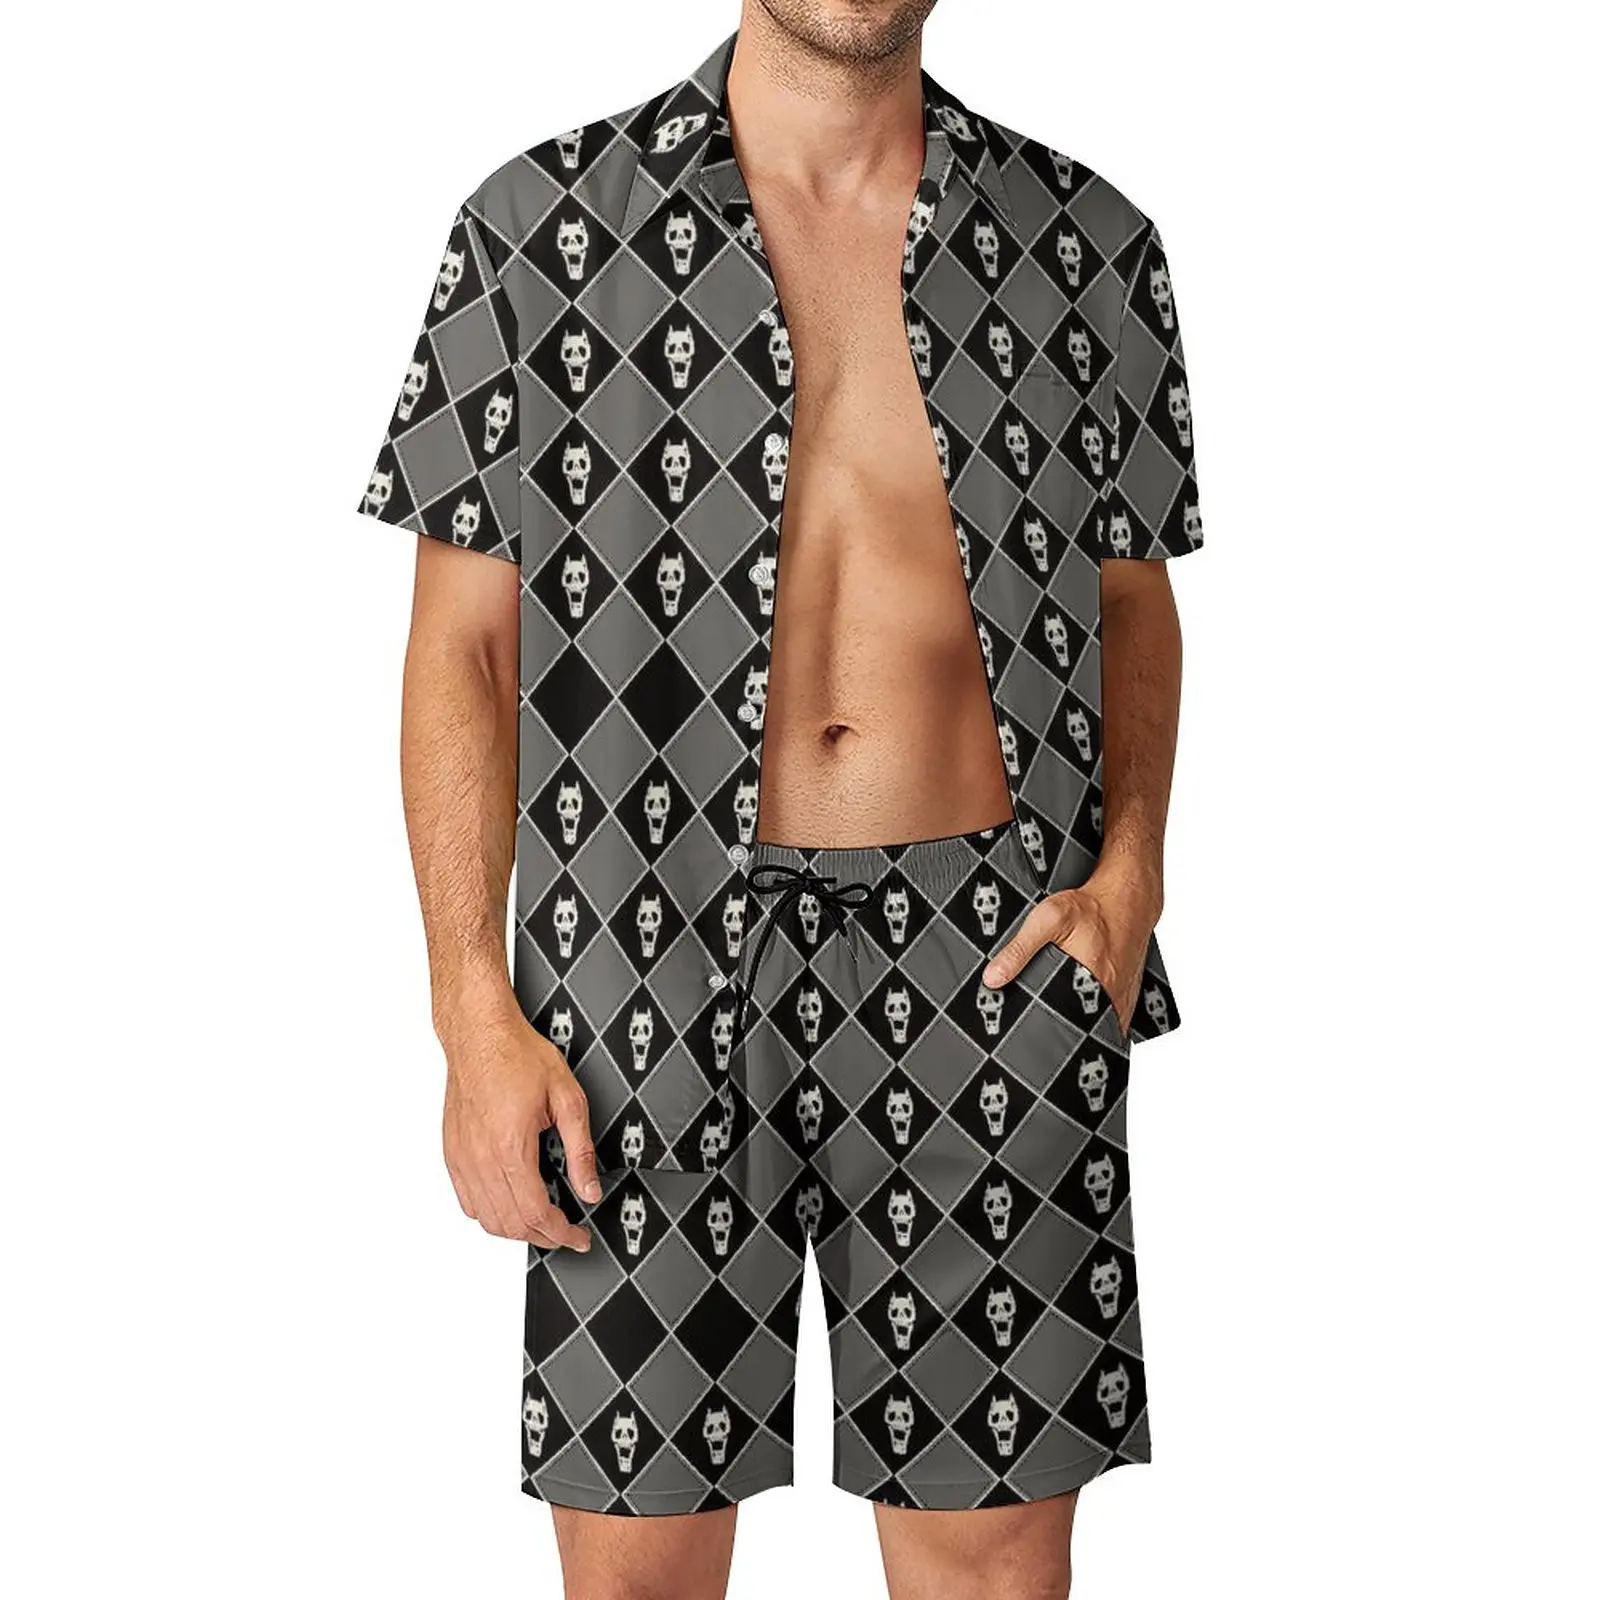 

Kira Yoshikage Skull Men Sets Jojos Bizzare Adventures Killer Queen Casual Shorts Trending Beach Shirt Set Graphic Oversize Suit